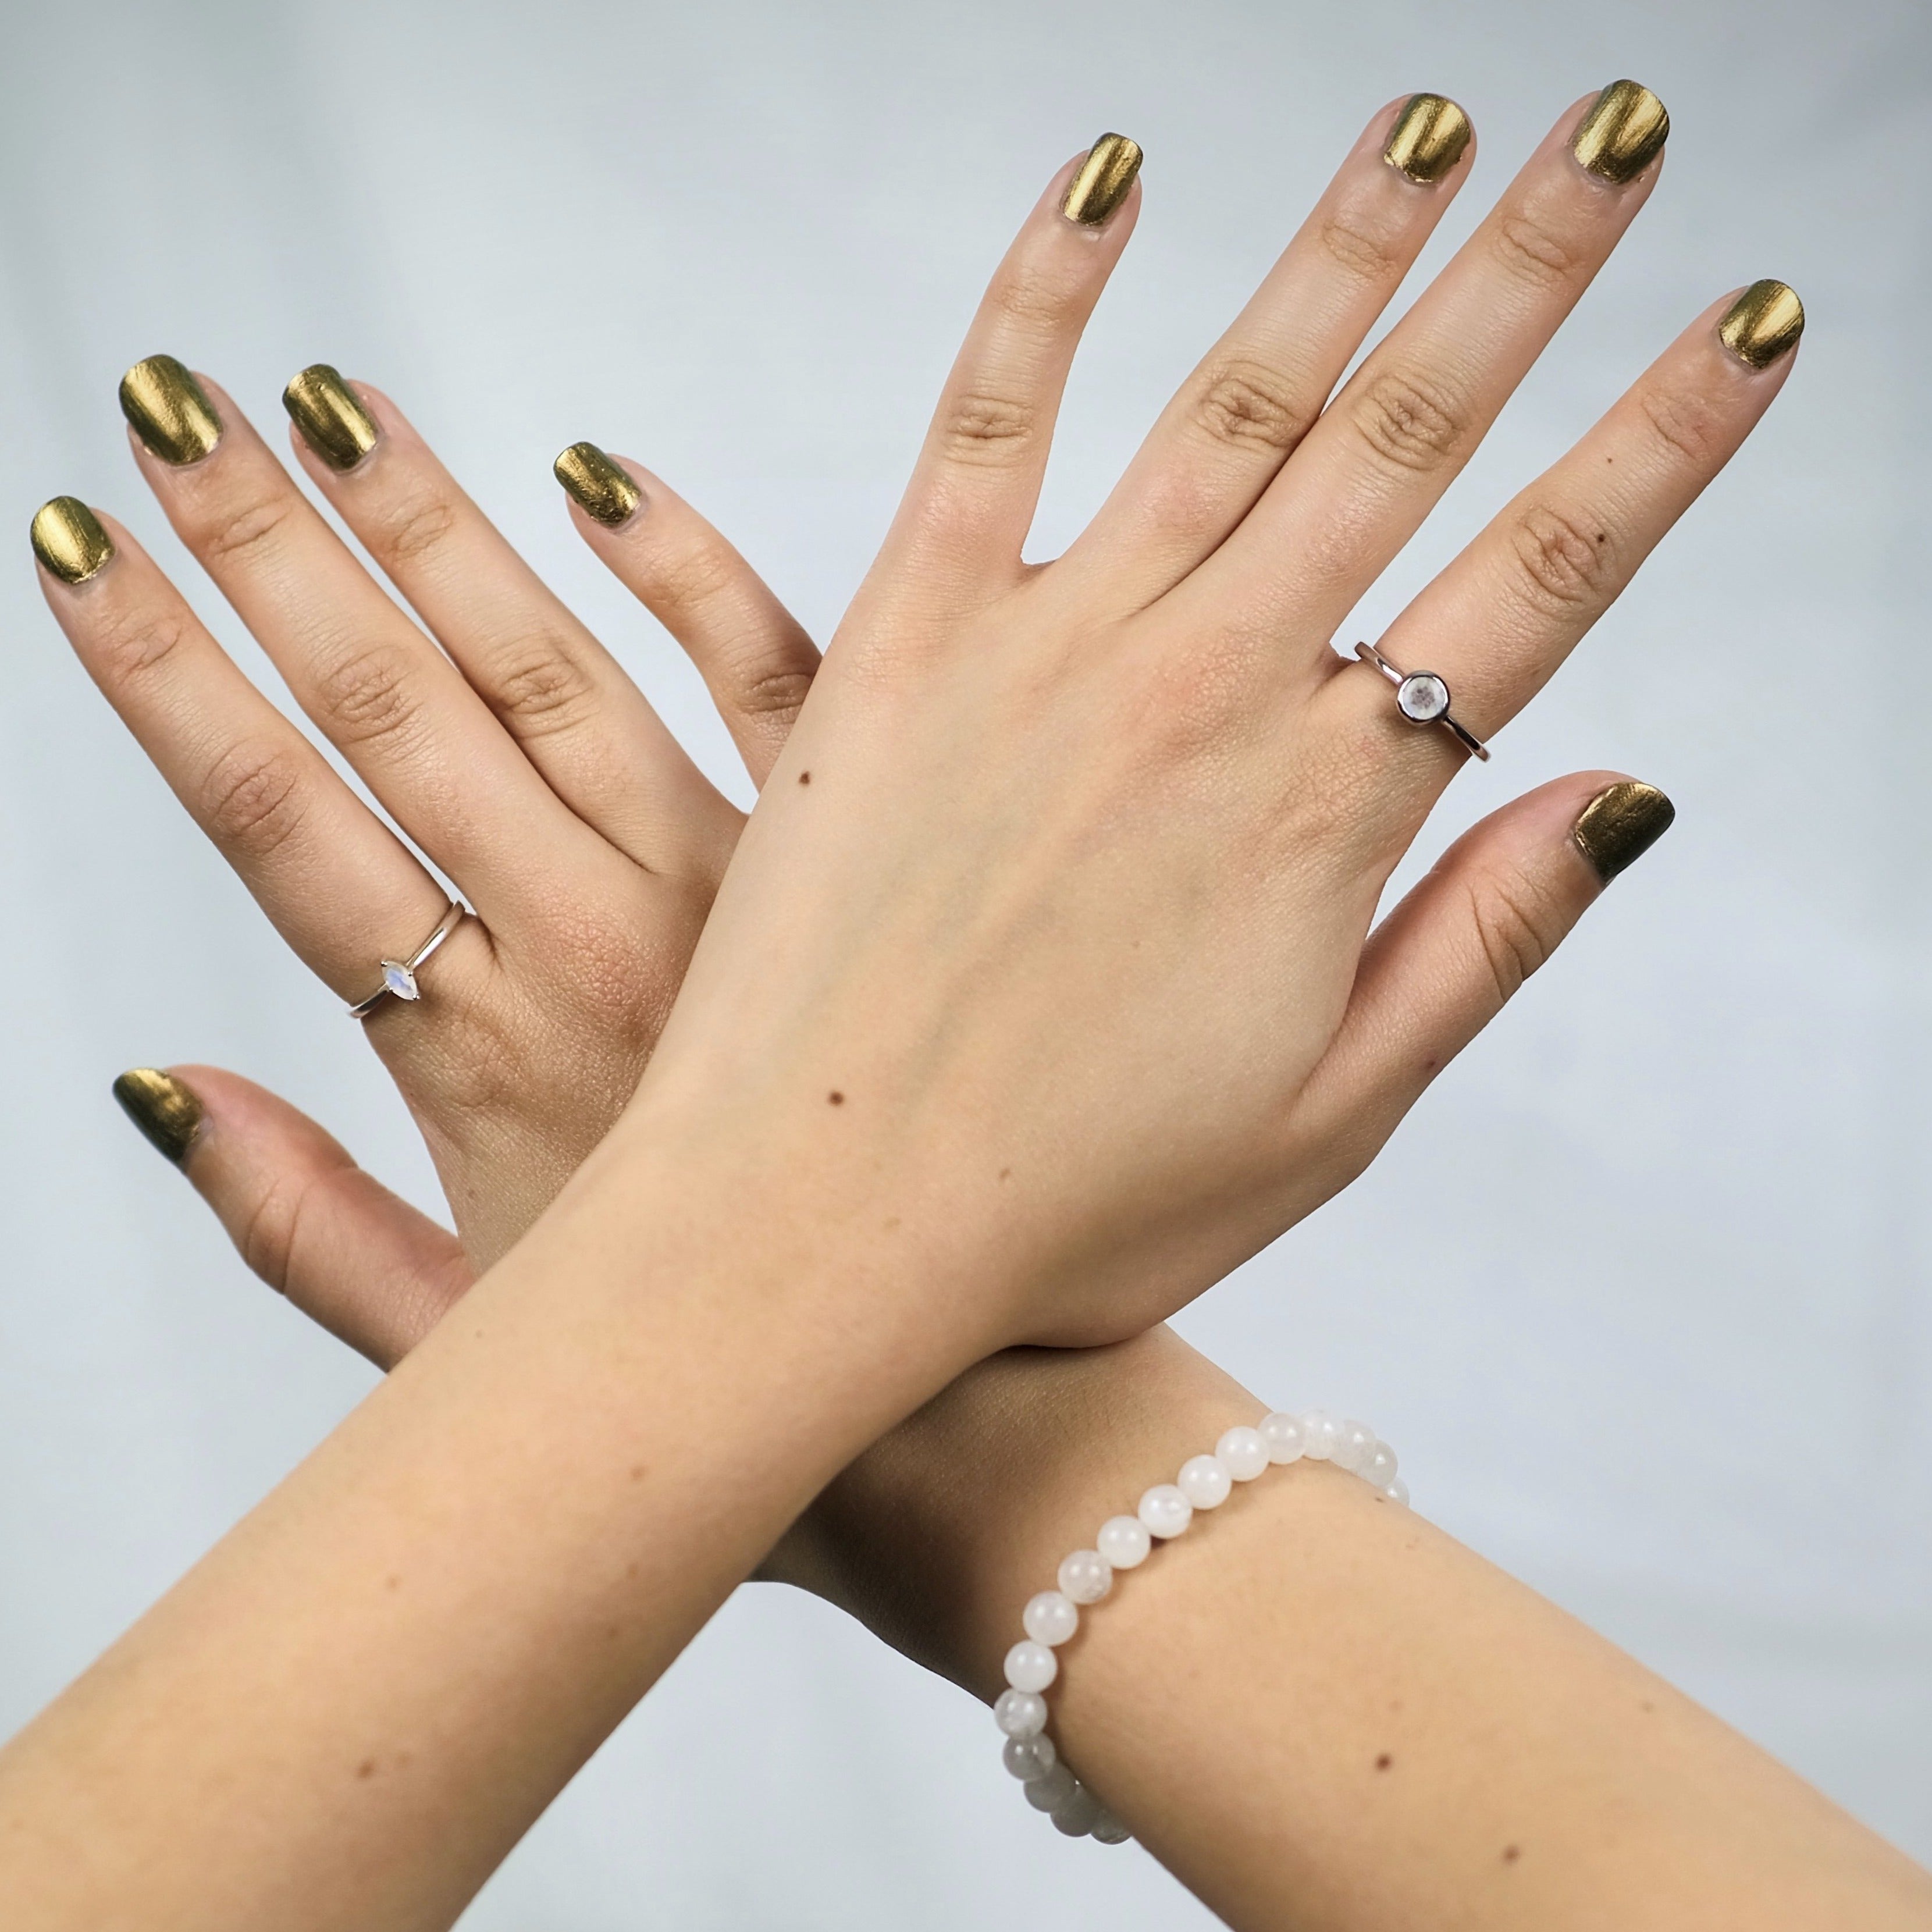 A model wearing moonstone gemstone rings and a bracelet